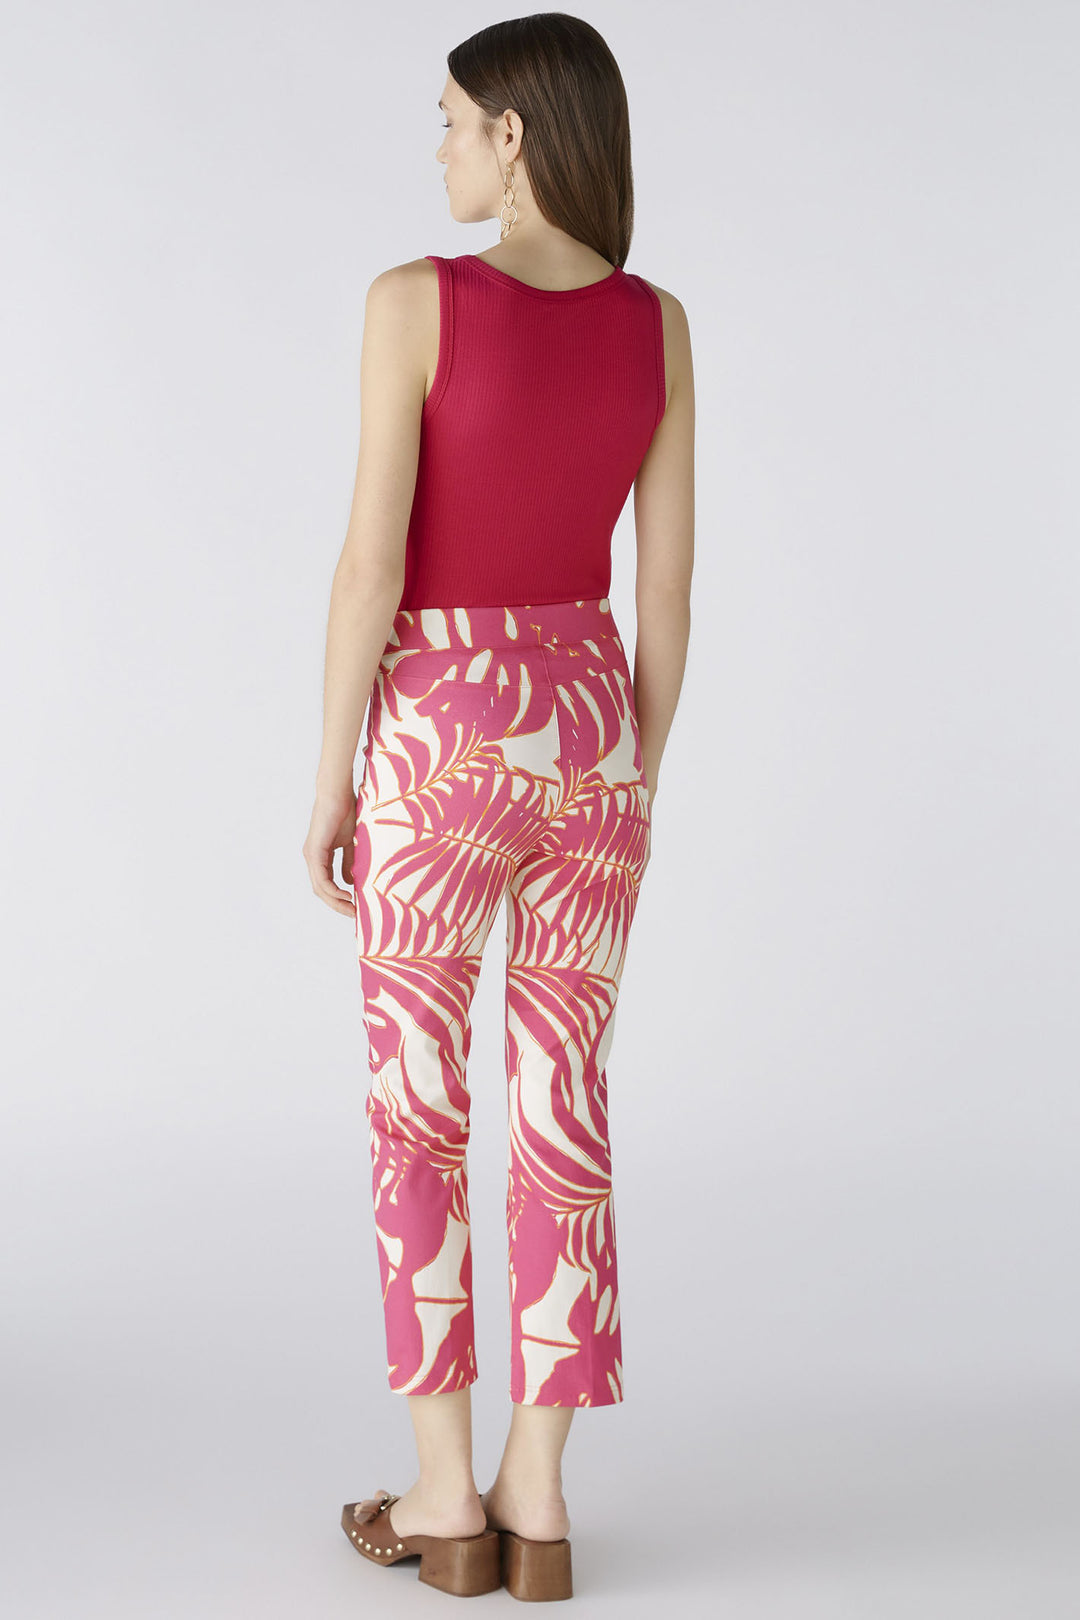 Oui 87578 Pink White Palm Print Pull-On Trousers - Olivia Grace Fashion